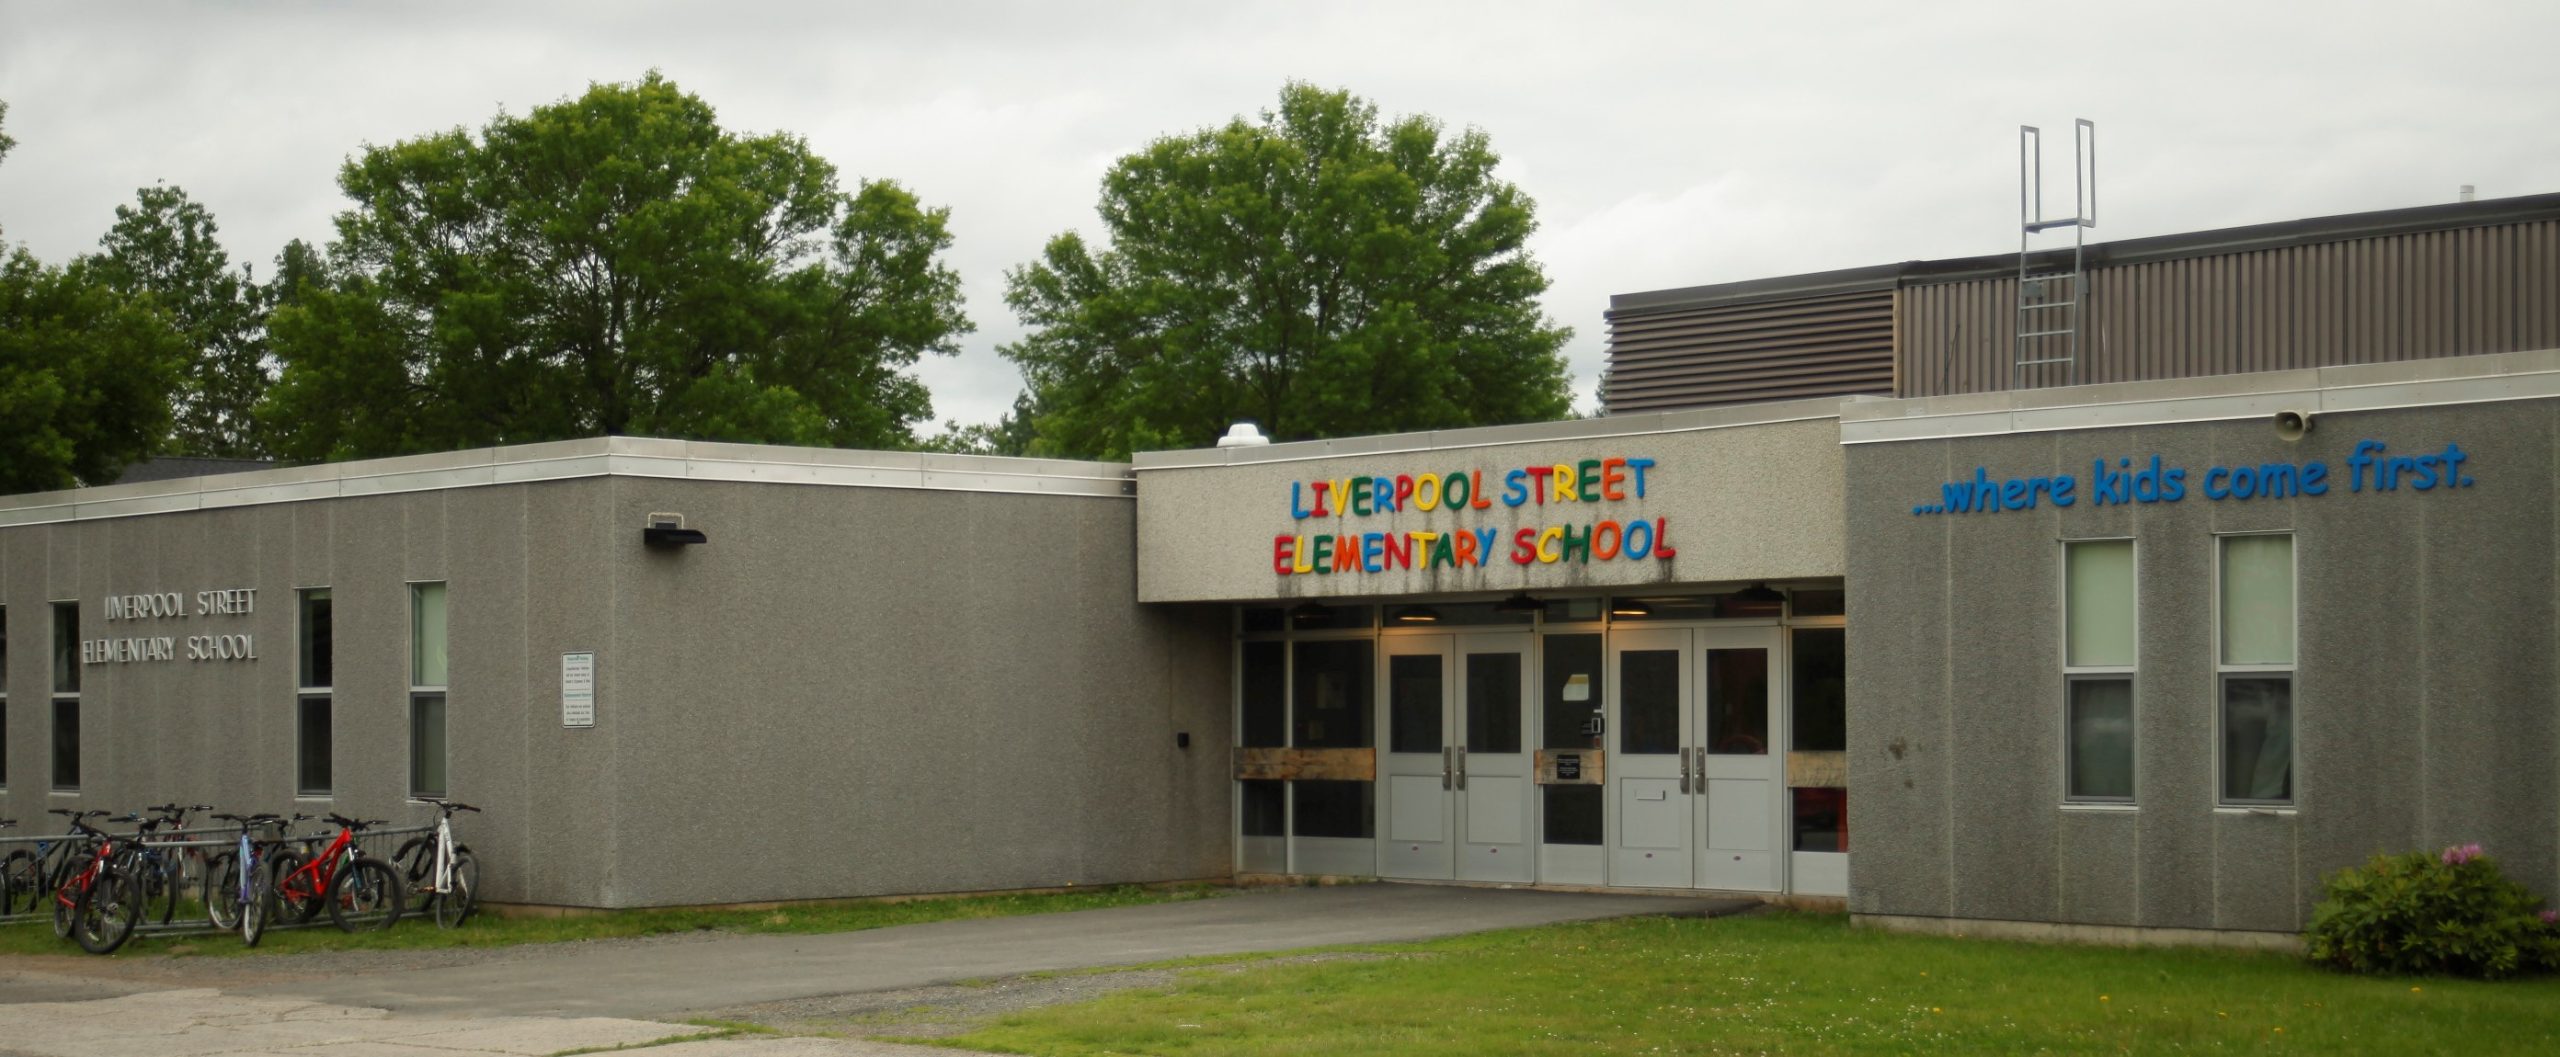 Liverpool Street Elementary School.